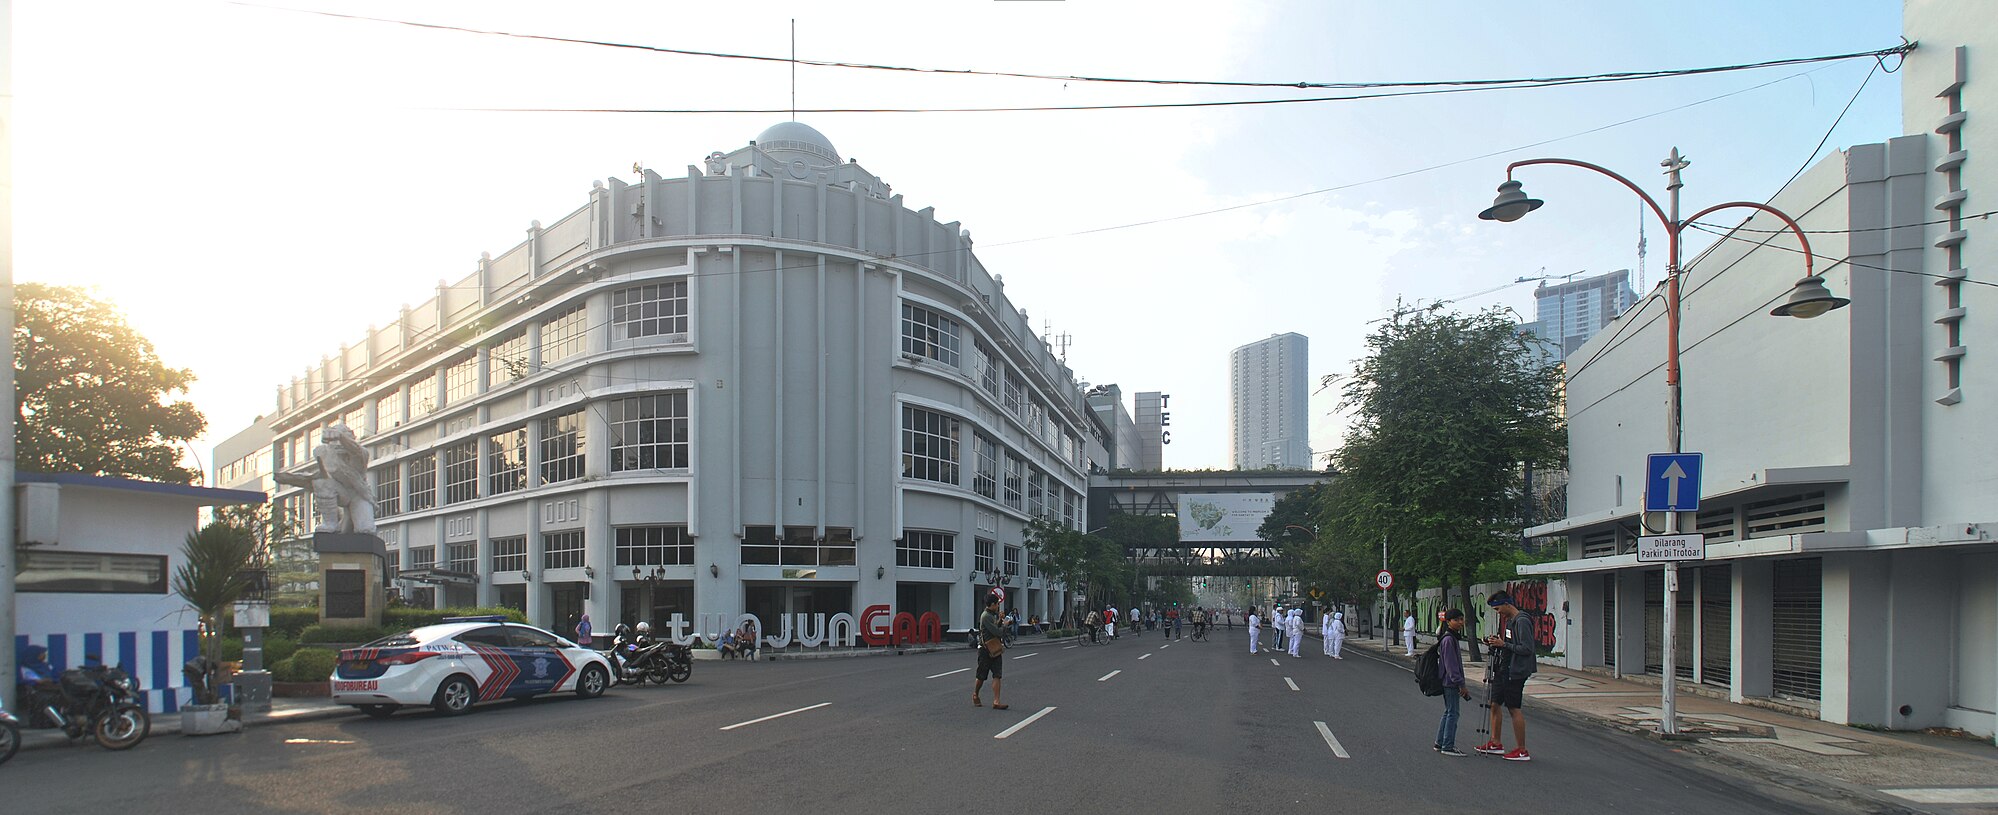 Tunjungan street and Siola building in Downtown Surabaya.